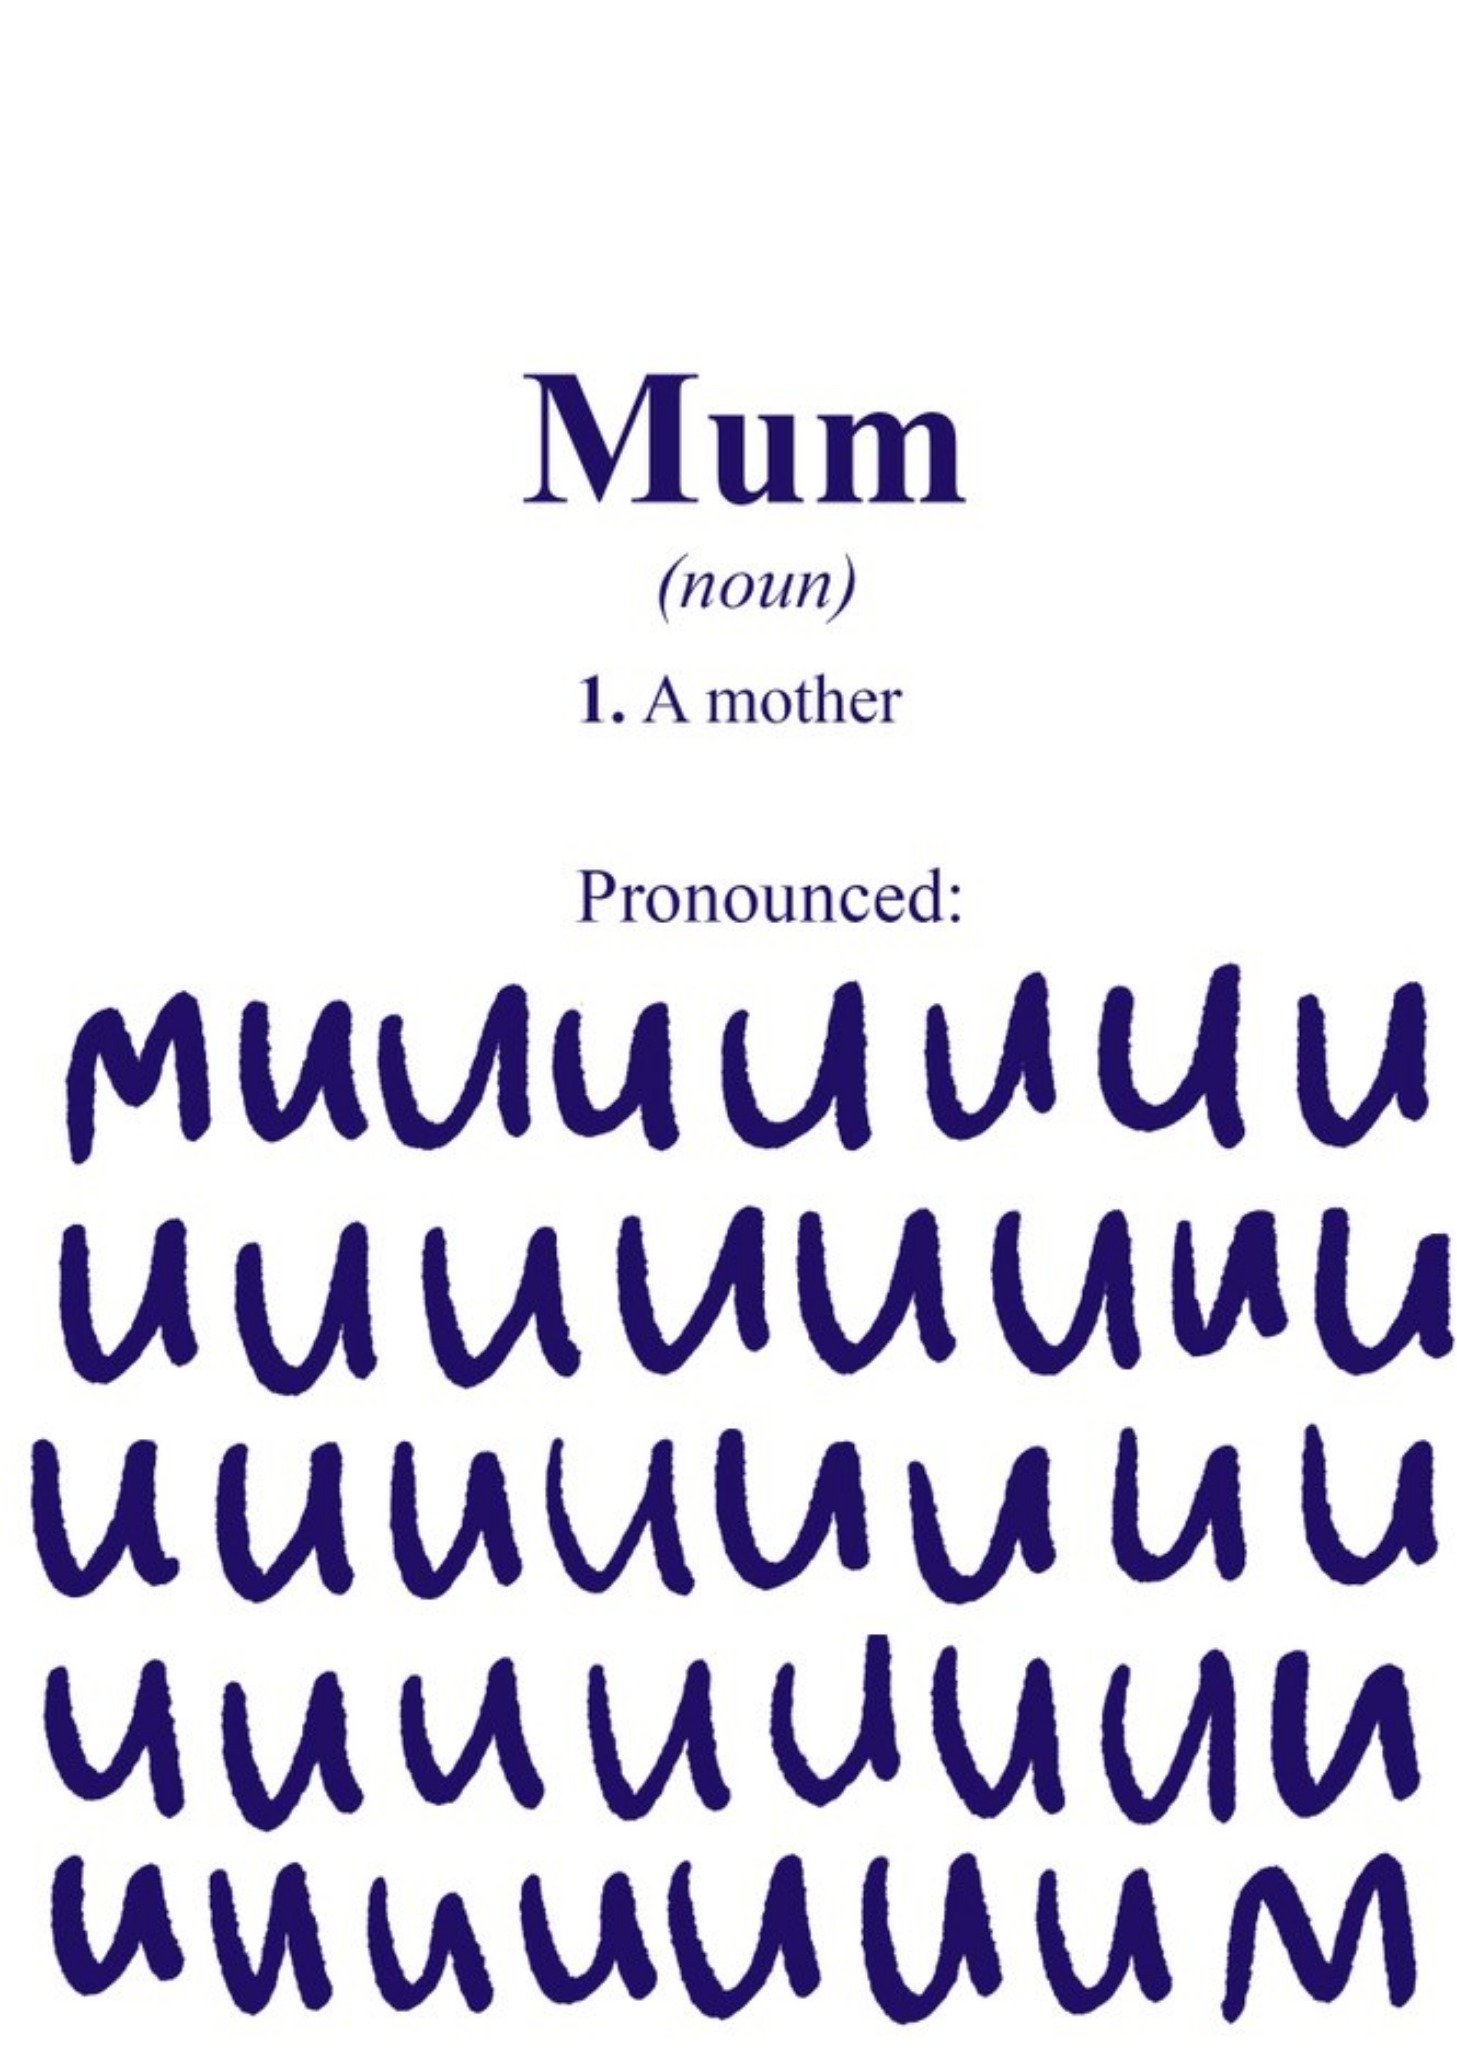 Moonpig Mum Is Pronounced Muuuuuuuuum Mother's Day Card Ecard